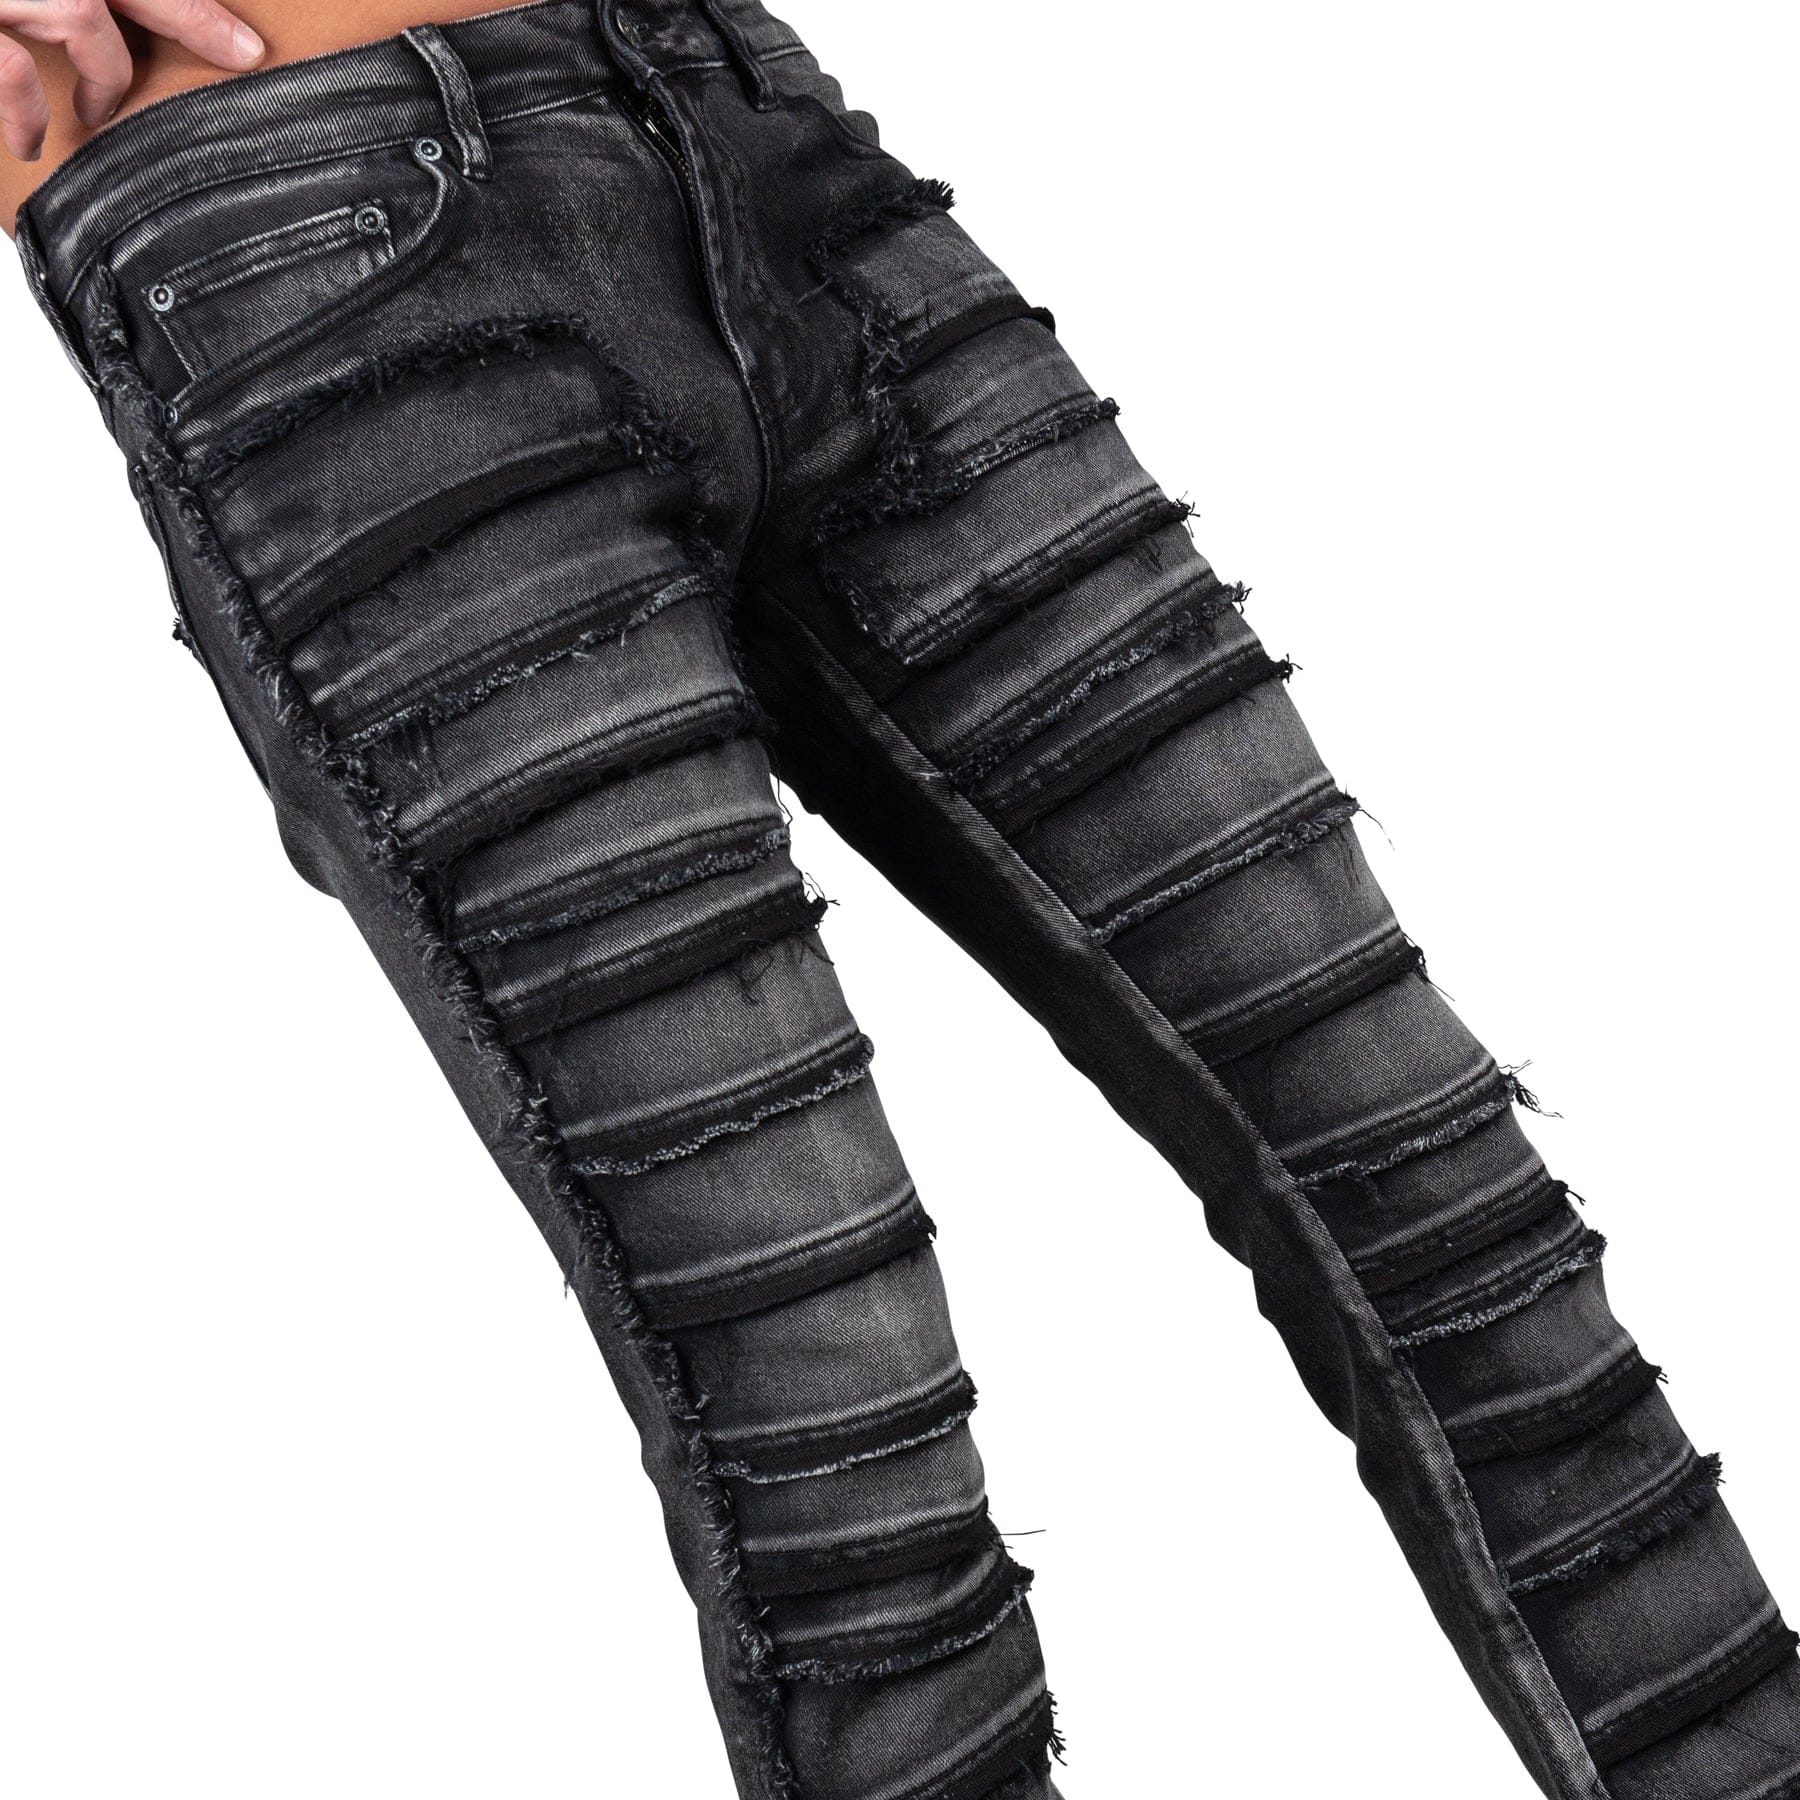 All Access Collection Pants Bandage Jeans - Vintage Black